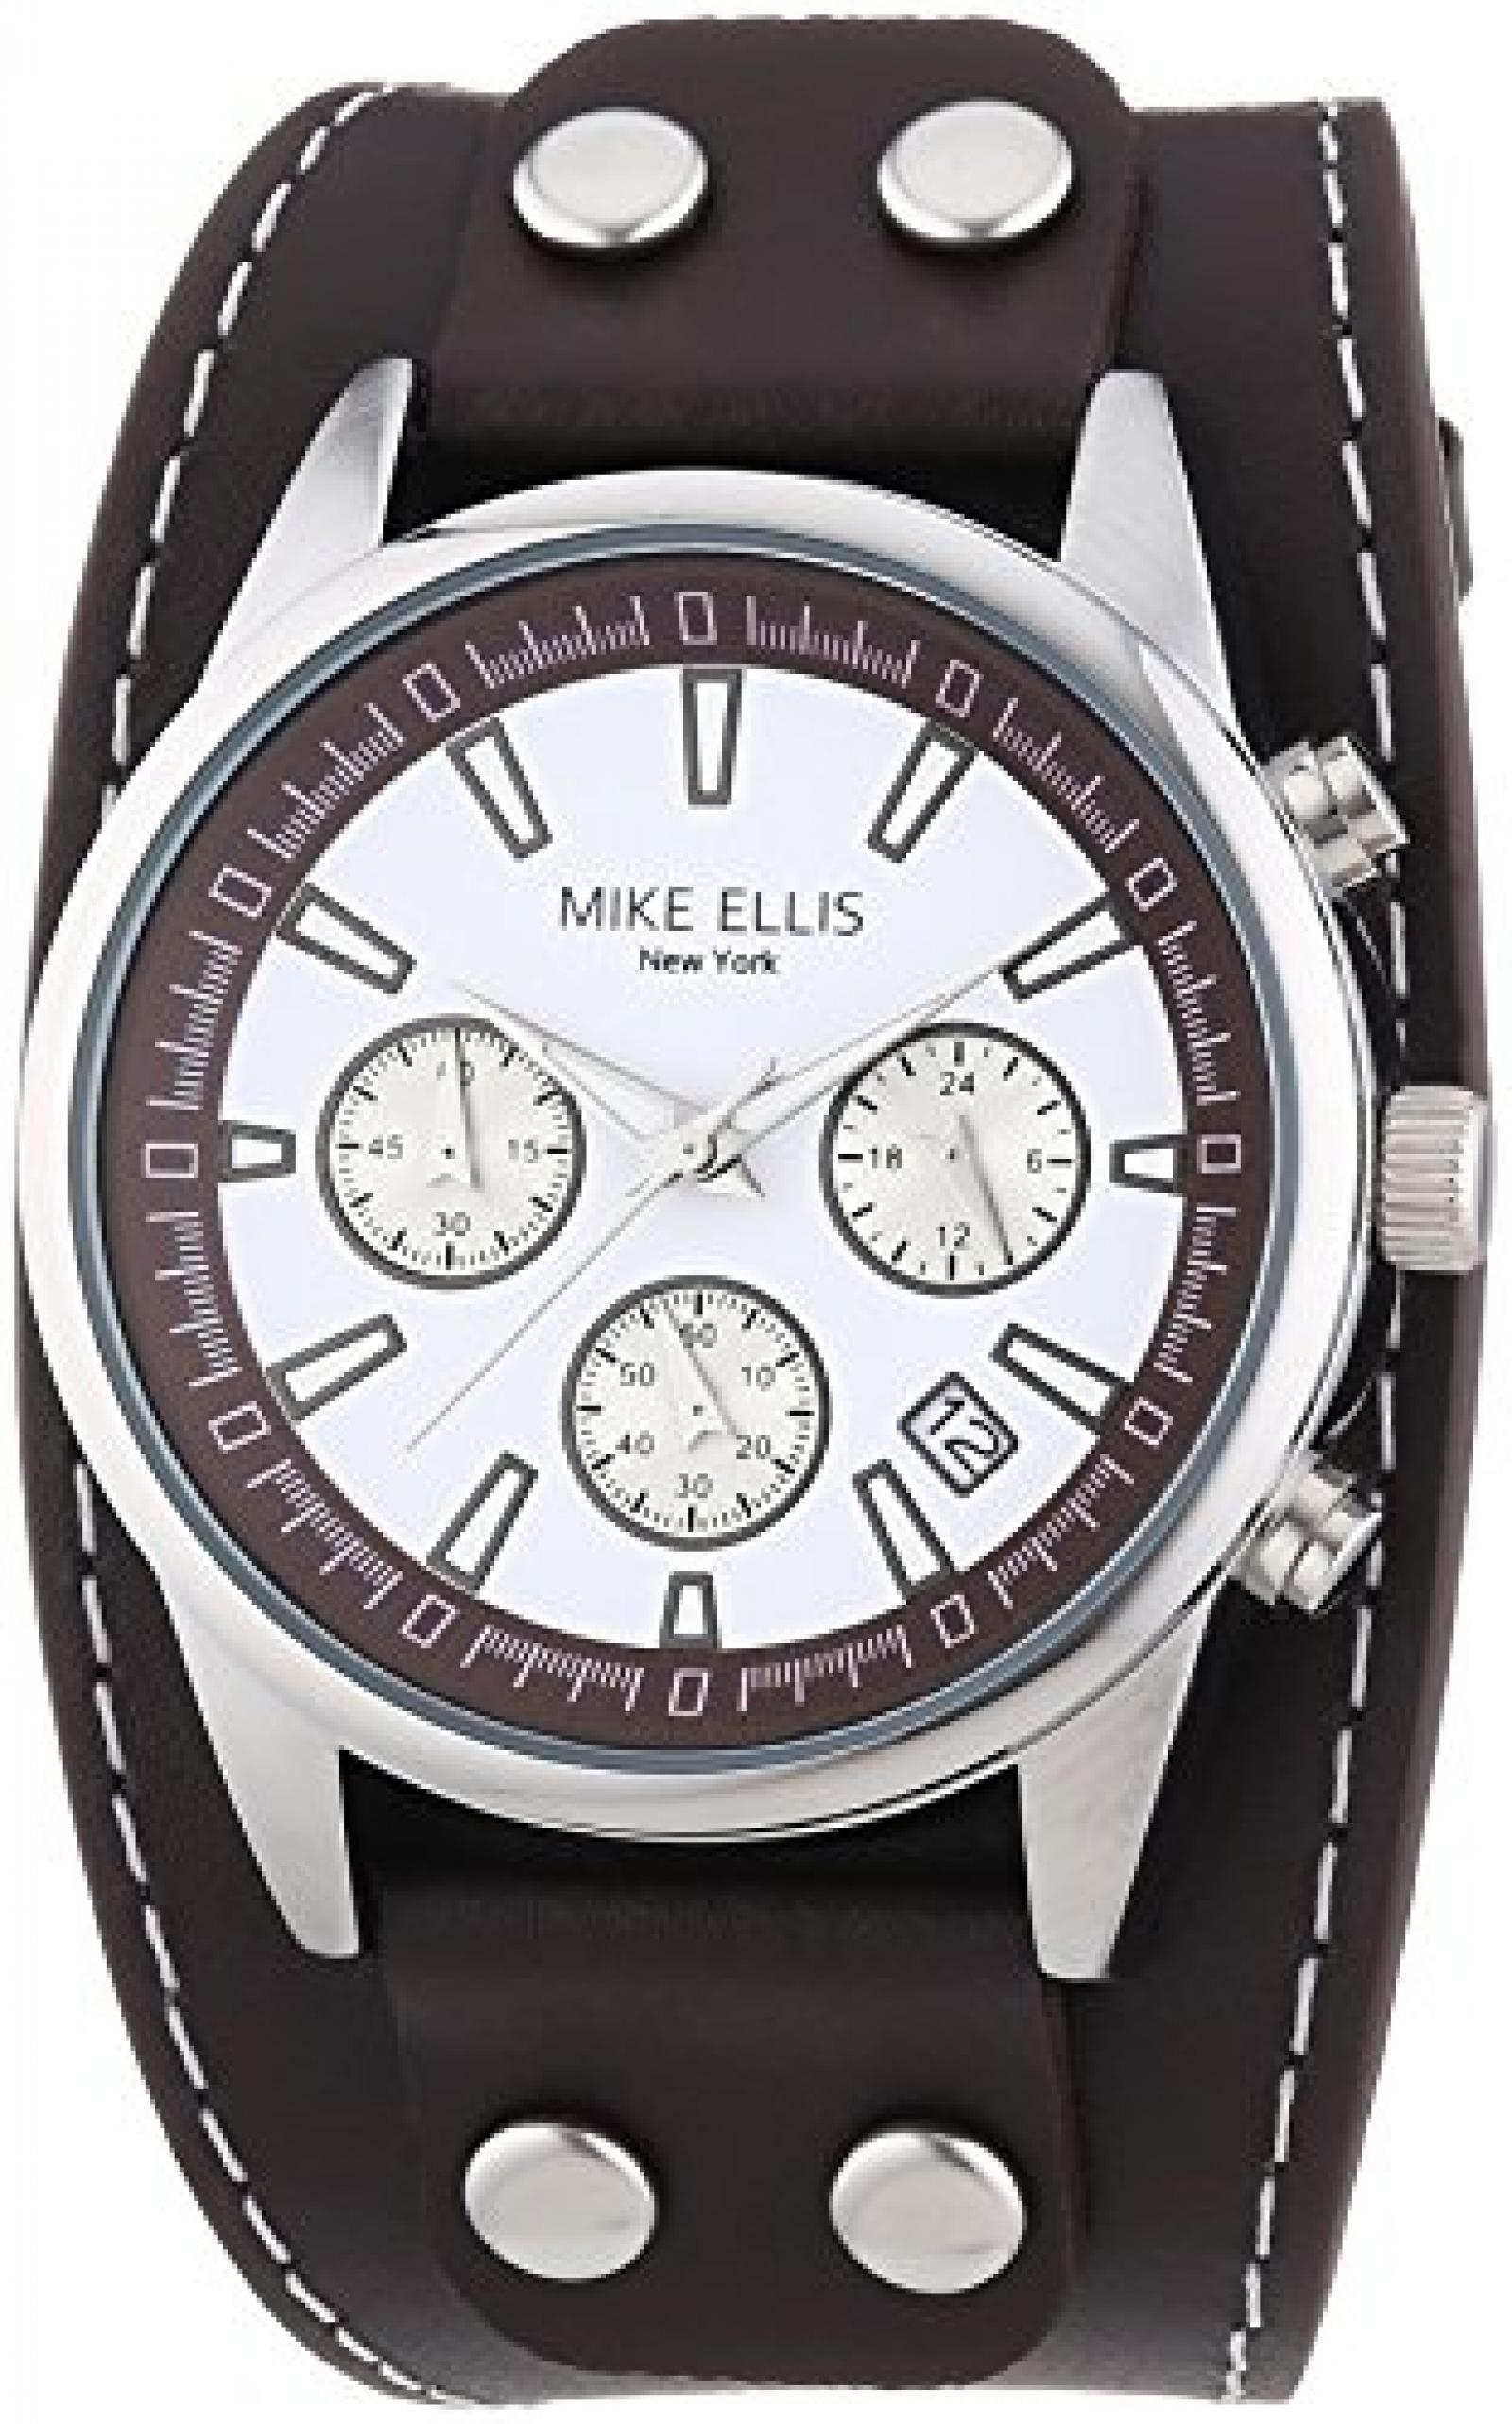 Mike Ellis New York Herren-Armbanduhr XL Chronograph Quarz Leder SL4-60223 